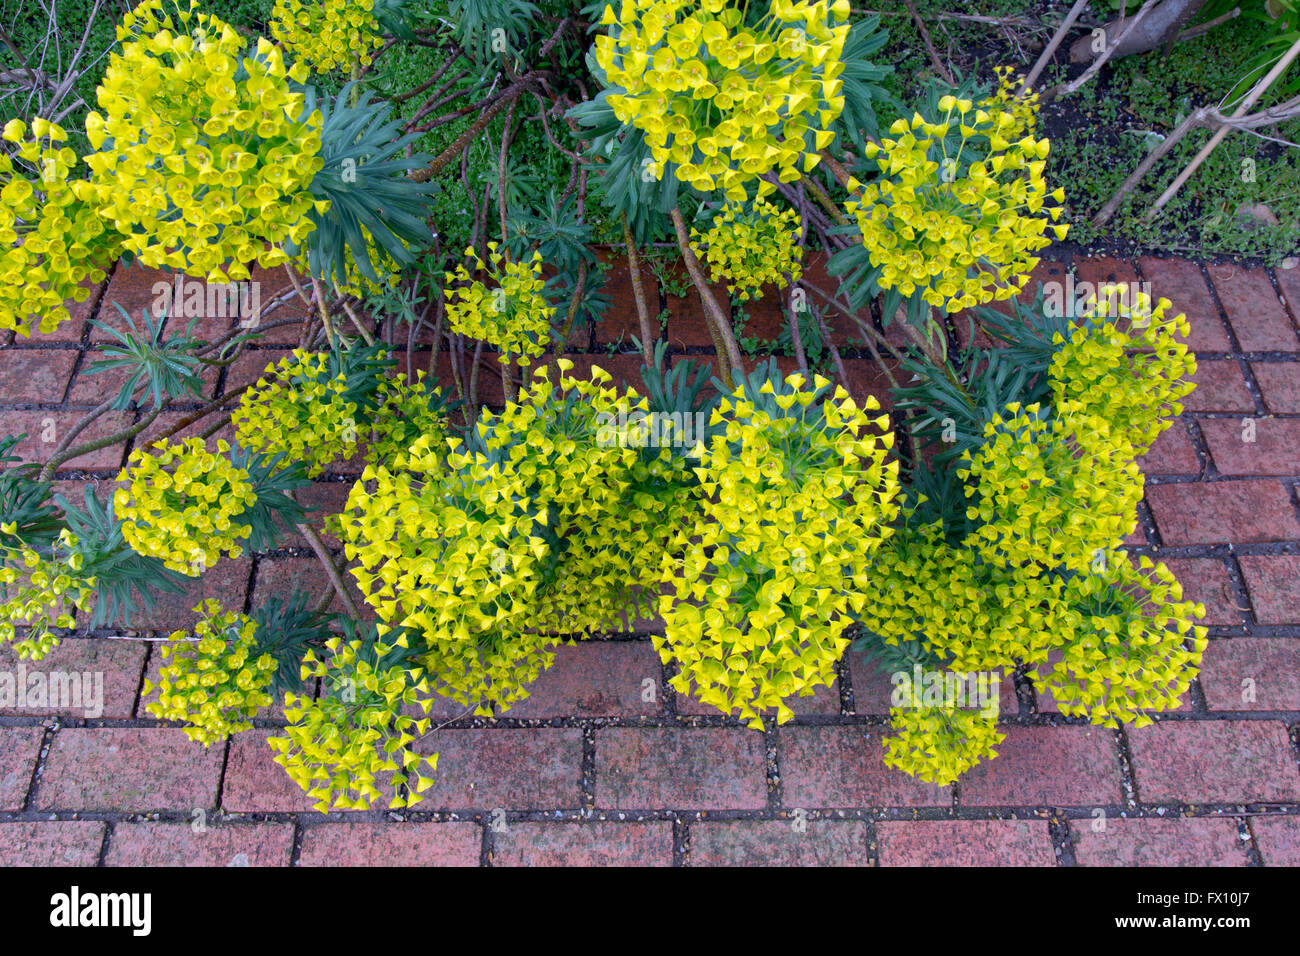 Euphorbia characias subsp. wulfenii spurge in garden with brick path Stock Photo